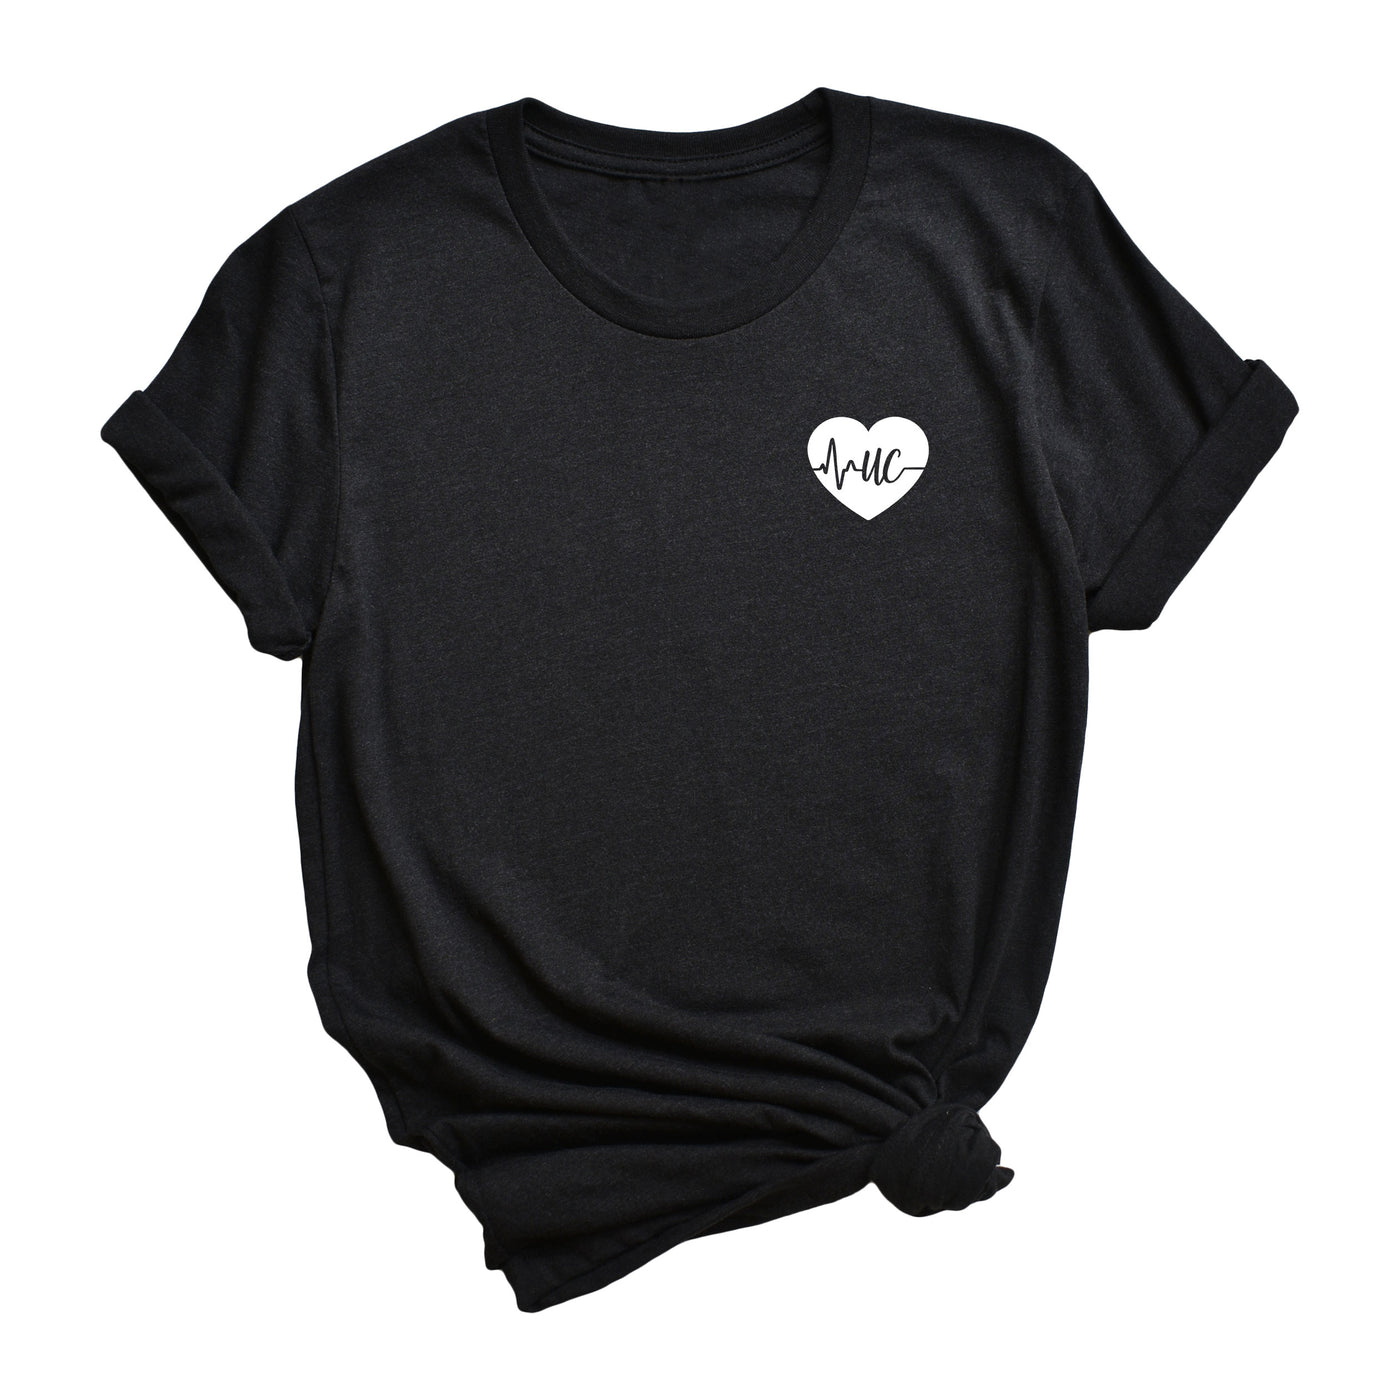 Unit Clerk ECG Heart - Shirt